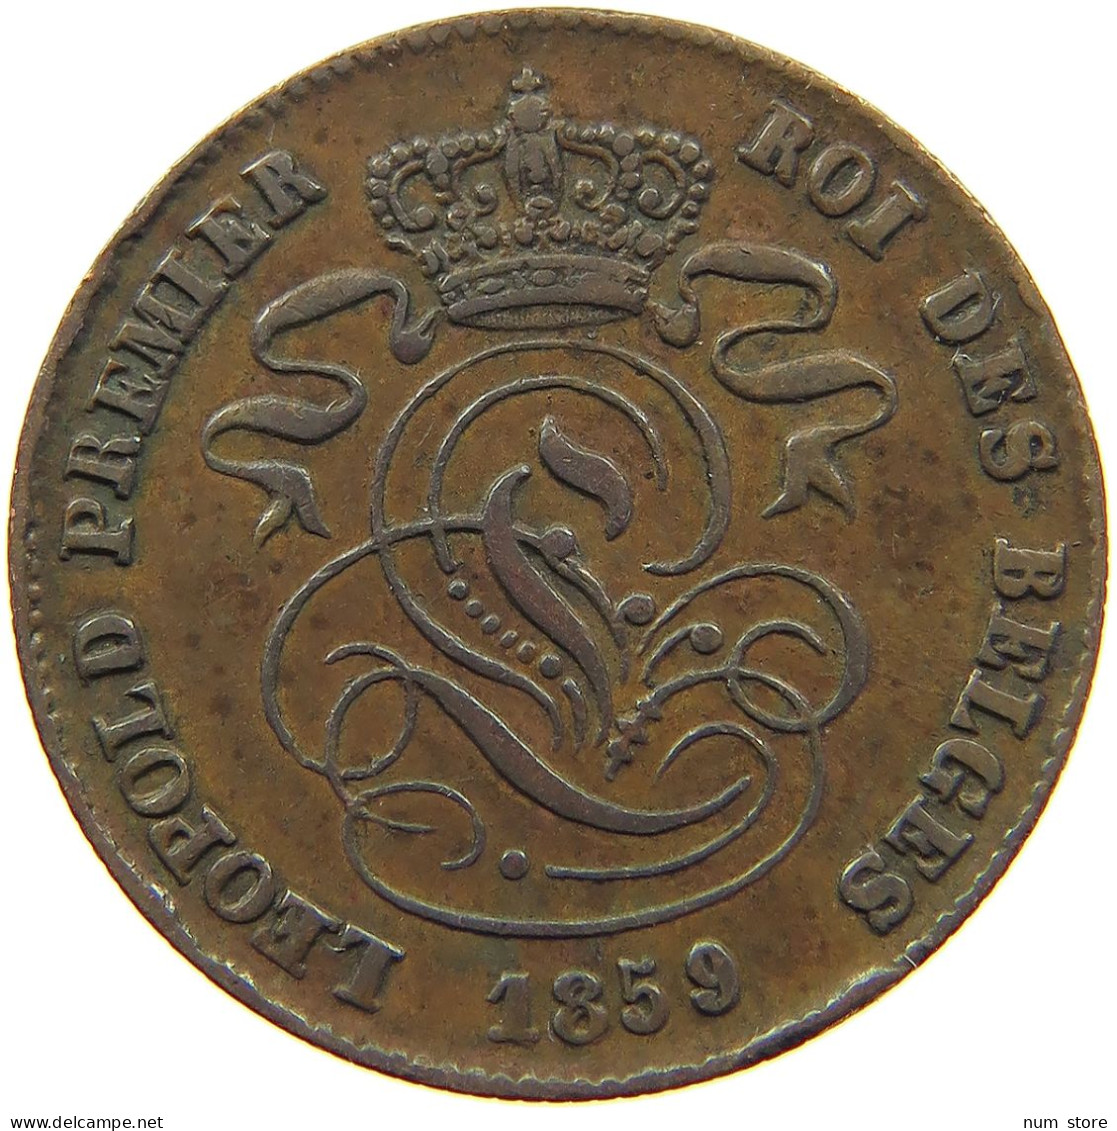 BELGIUM 2 CENTIMES 1859 LEOPOLD I. (1831-1865) DOBULE STRUCK 8 #MA 100946 - 2 Cents